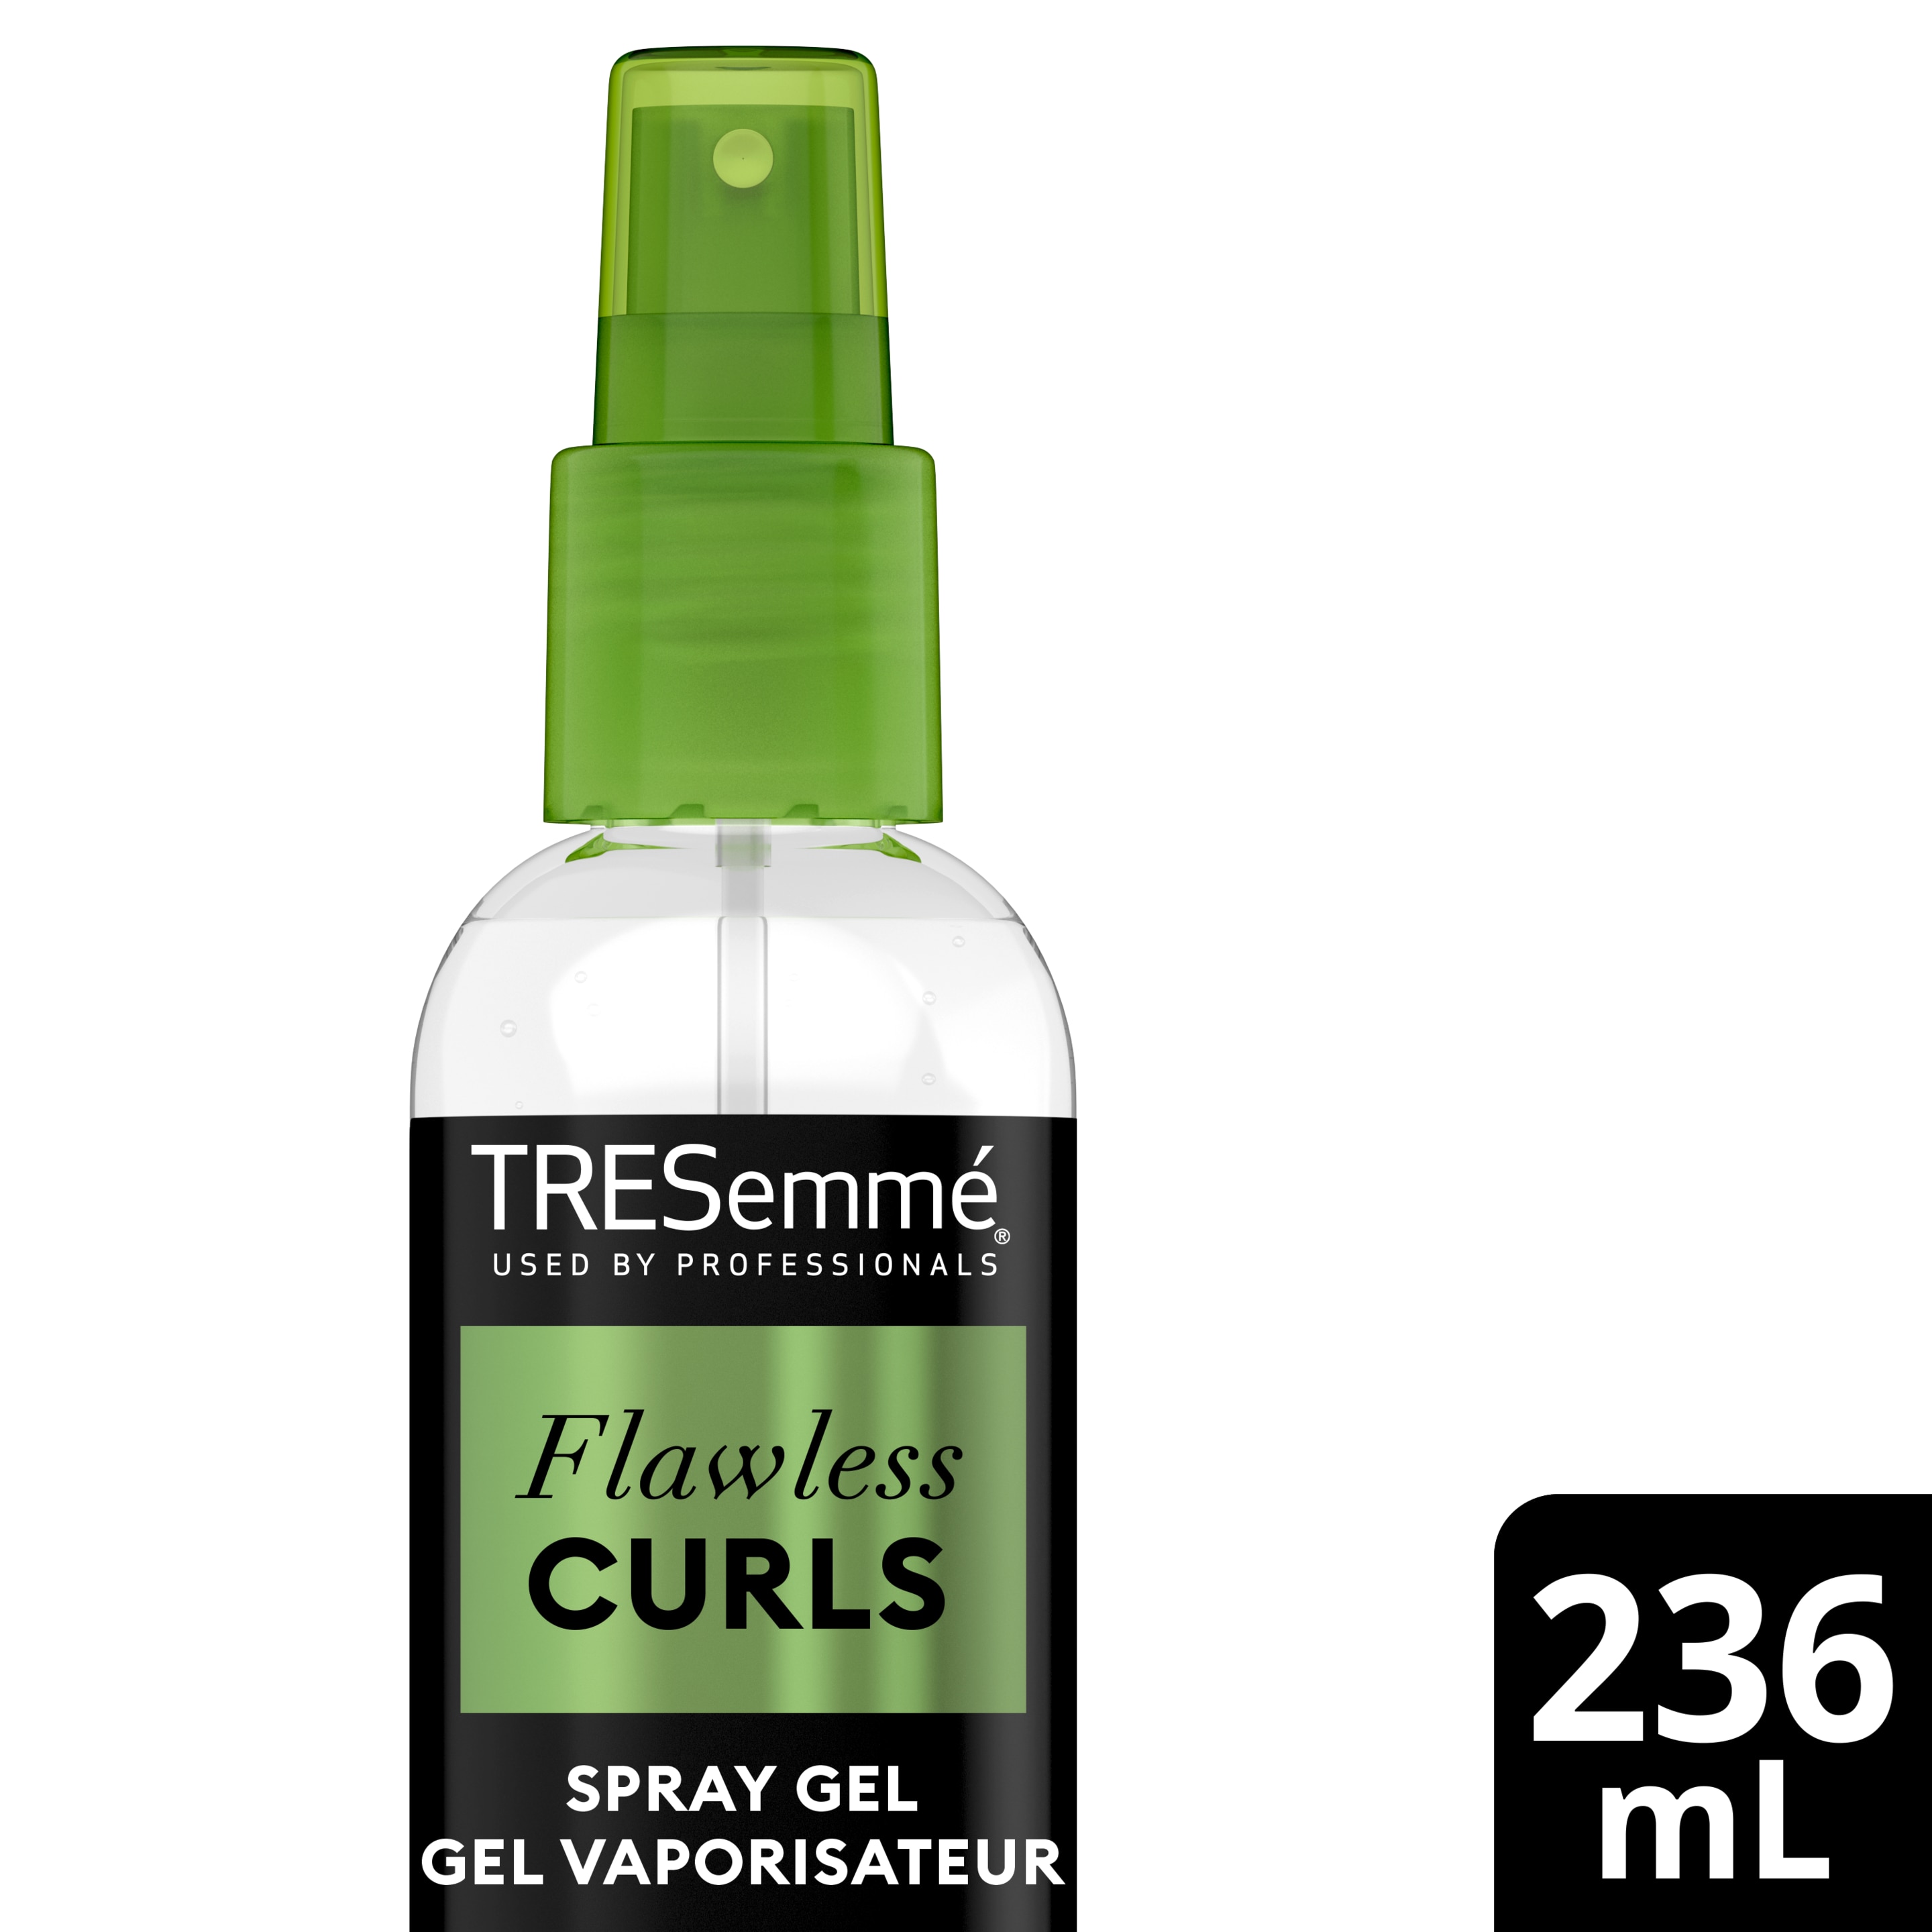 A 236 ml bottle of Curl Defining Spray Gel